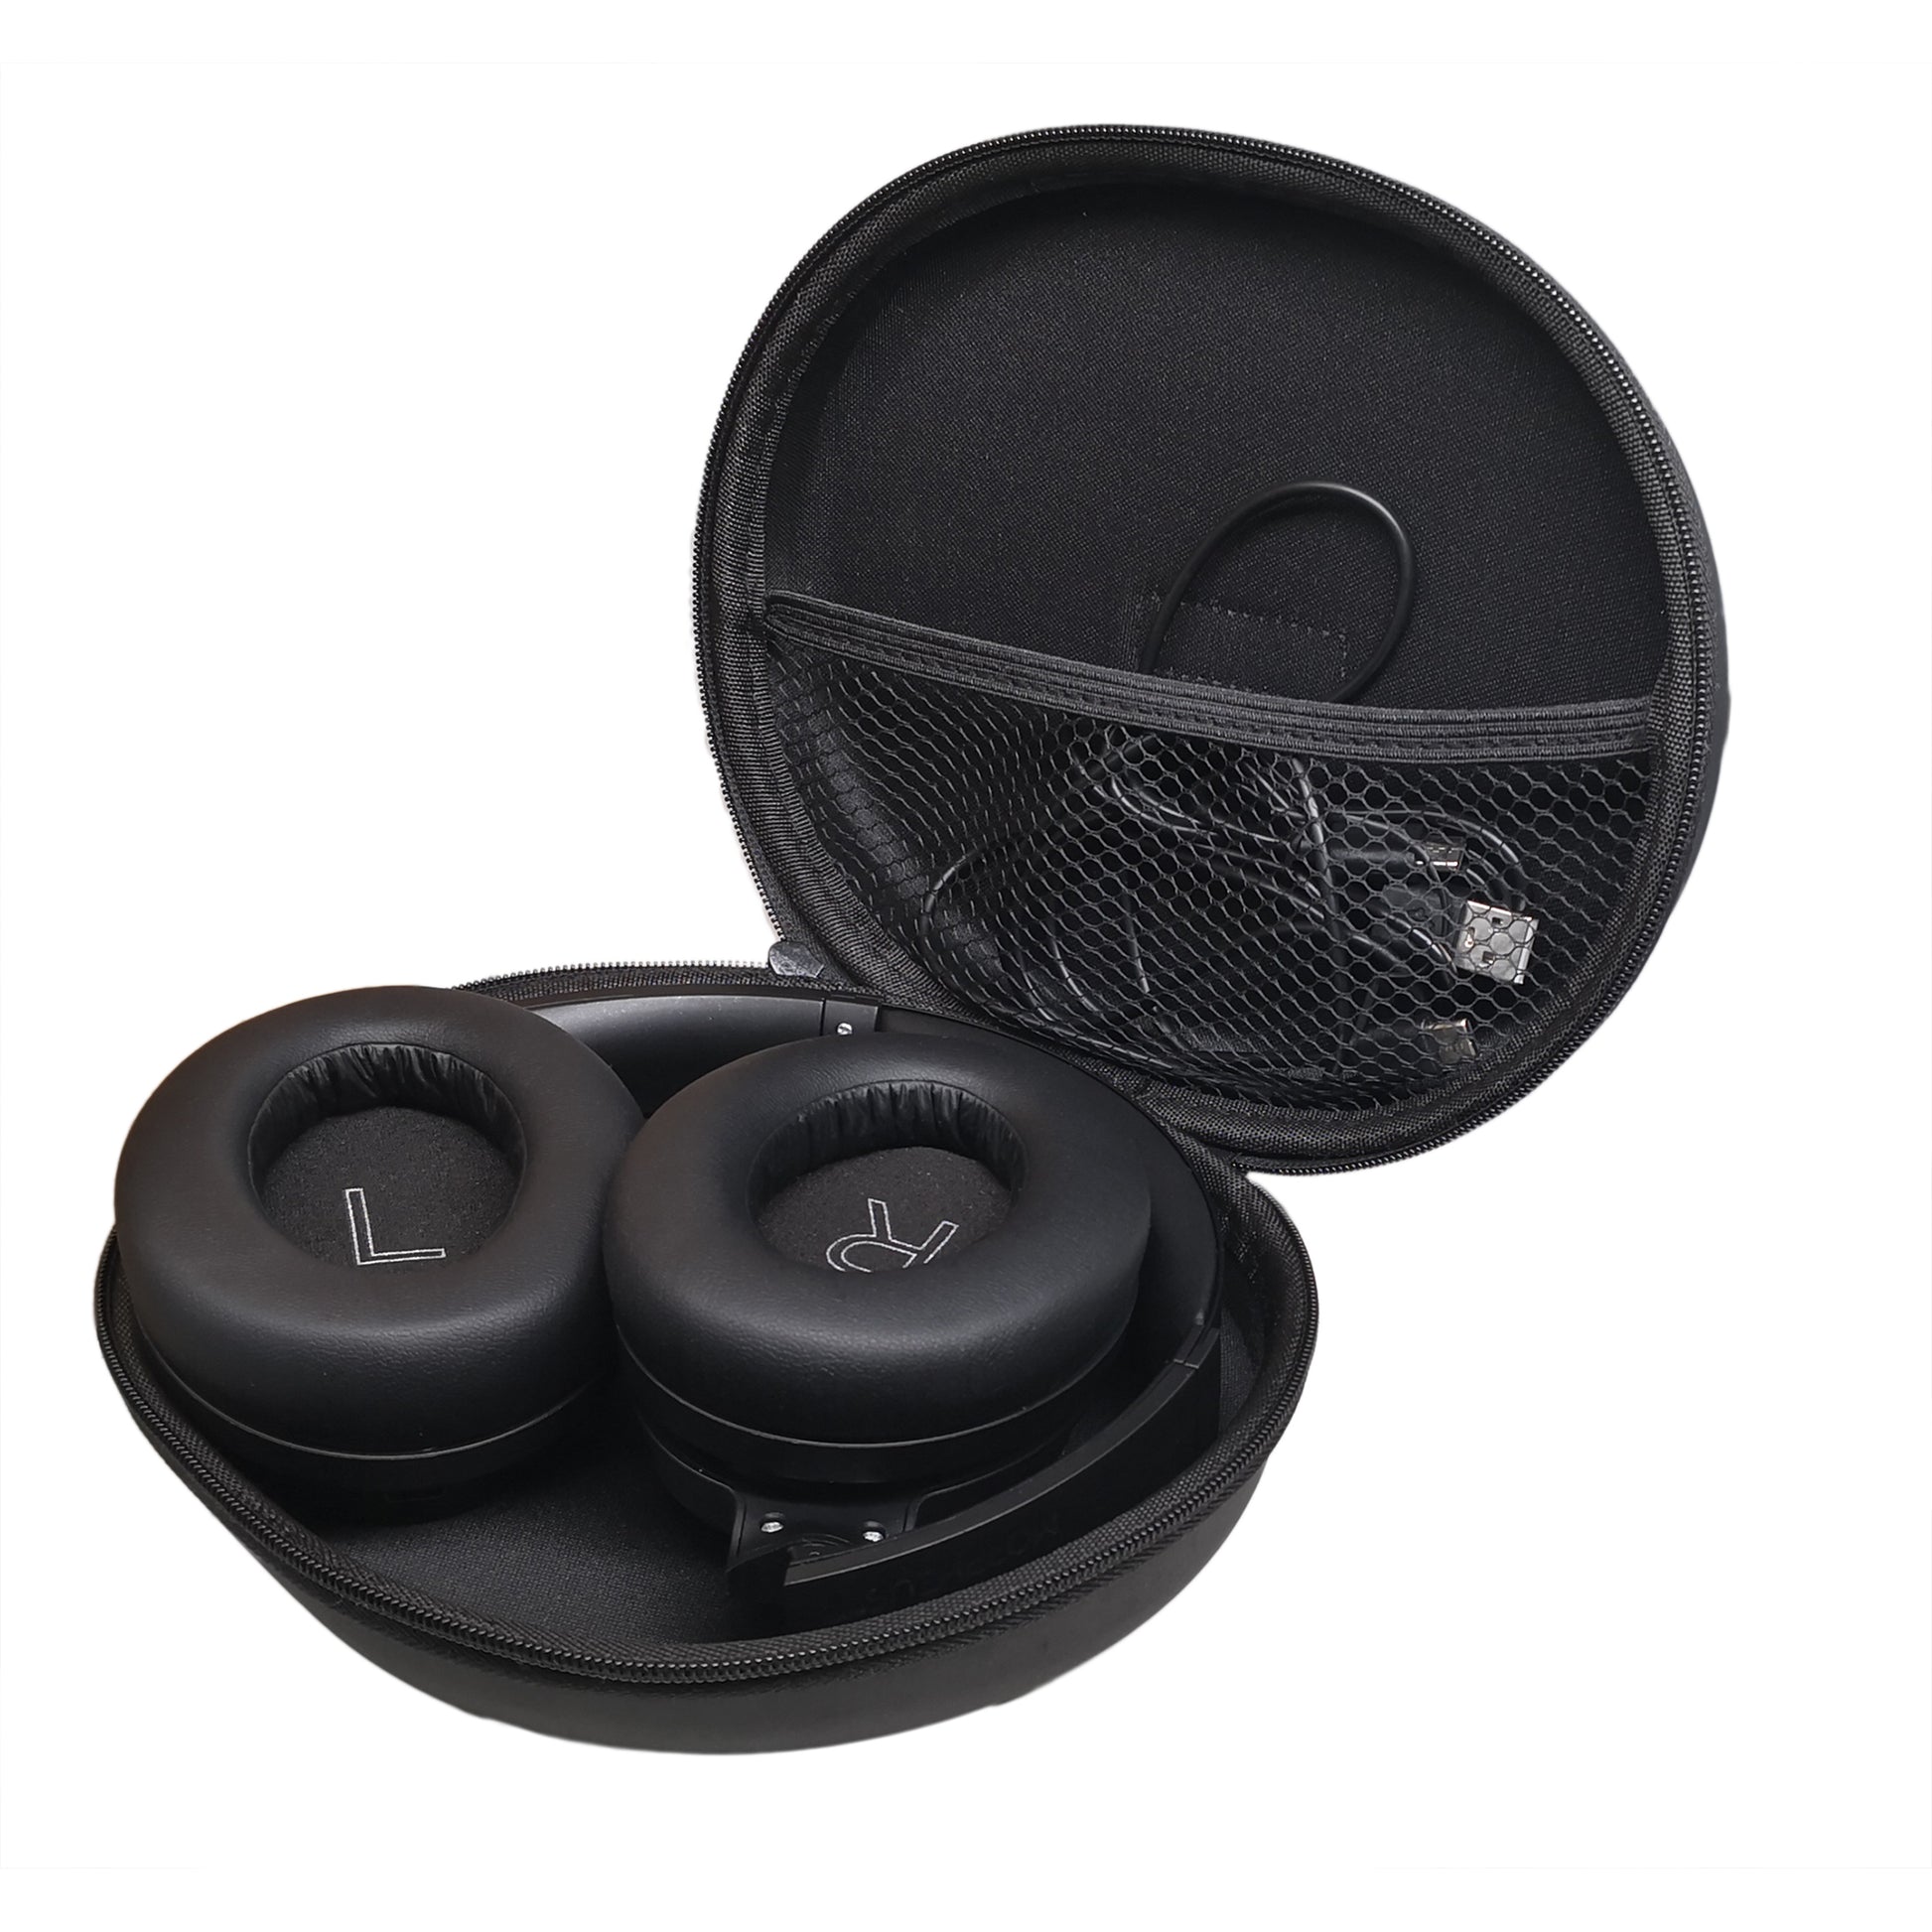 Morpheus 360 Pulse HD V-Hybrid True Wireless Earbuds, Black (TW7800B)